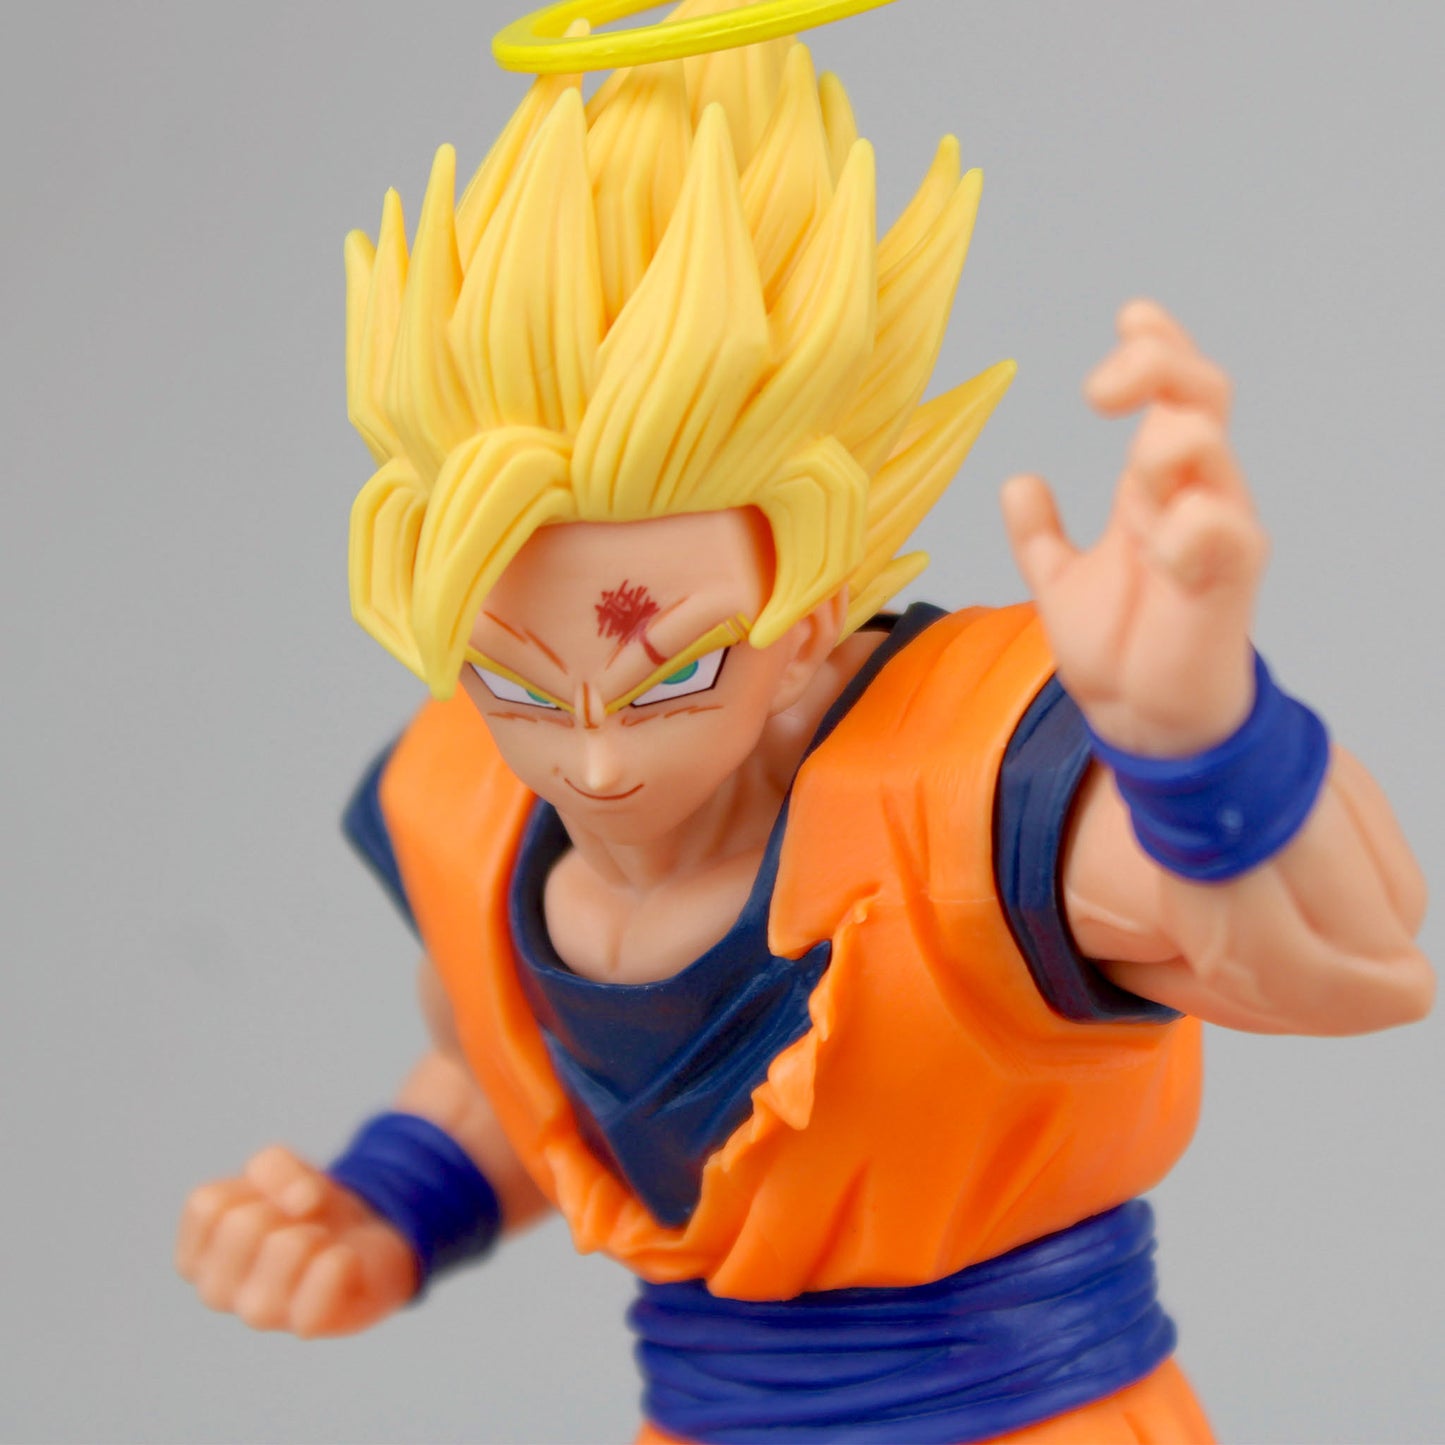 Son Goku 2